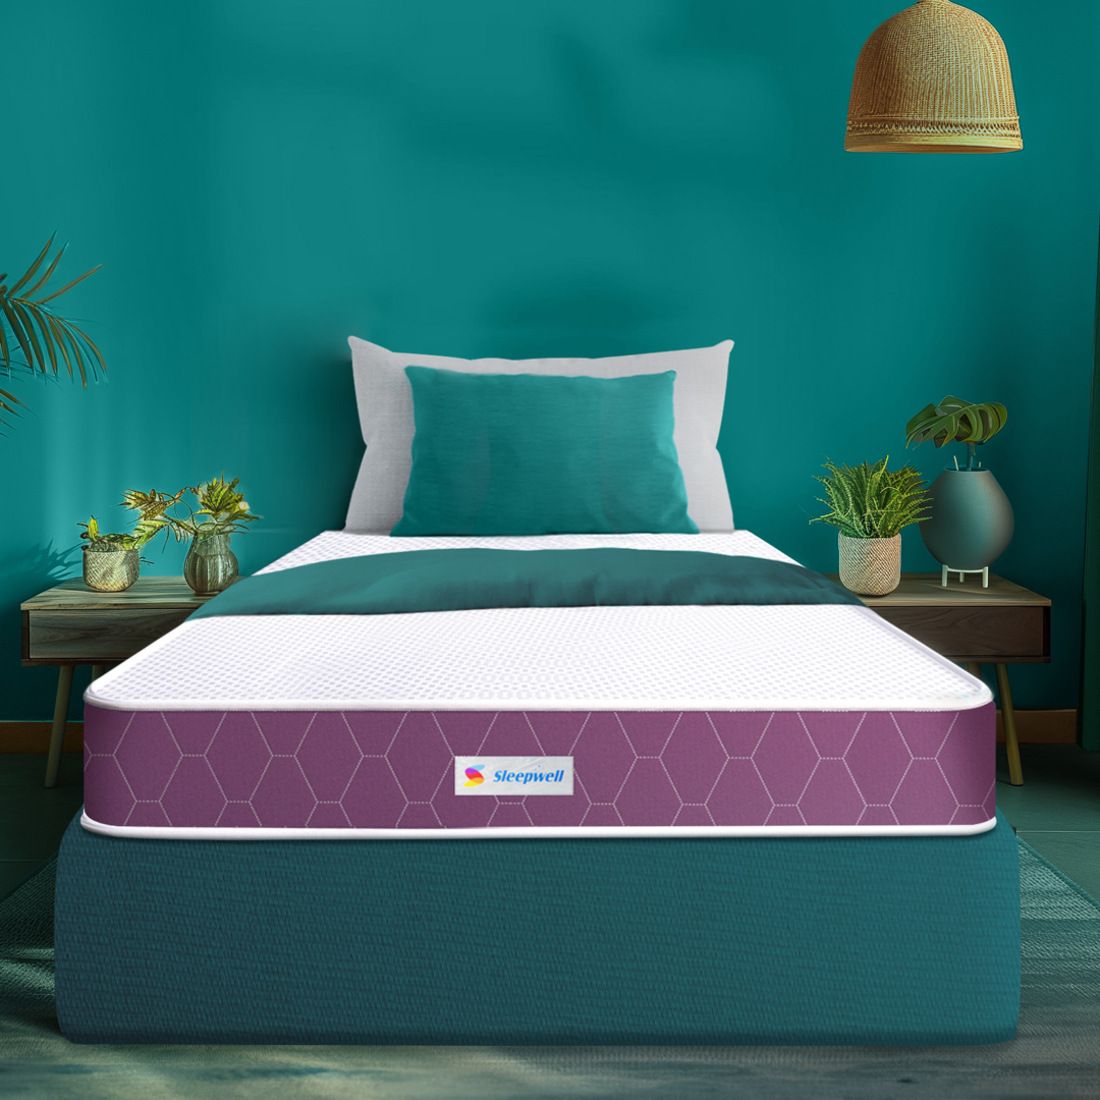 Sleepwell Ortho Mattress | Quilted | 8-inch Single Bed Size, Impressions Memory Foam, Medium Firm Mattress(Purple, 84x36X8)